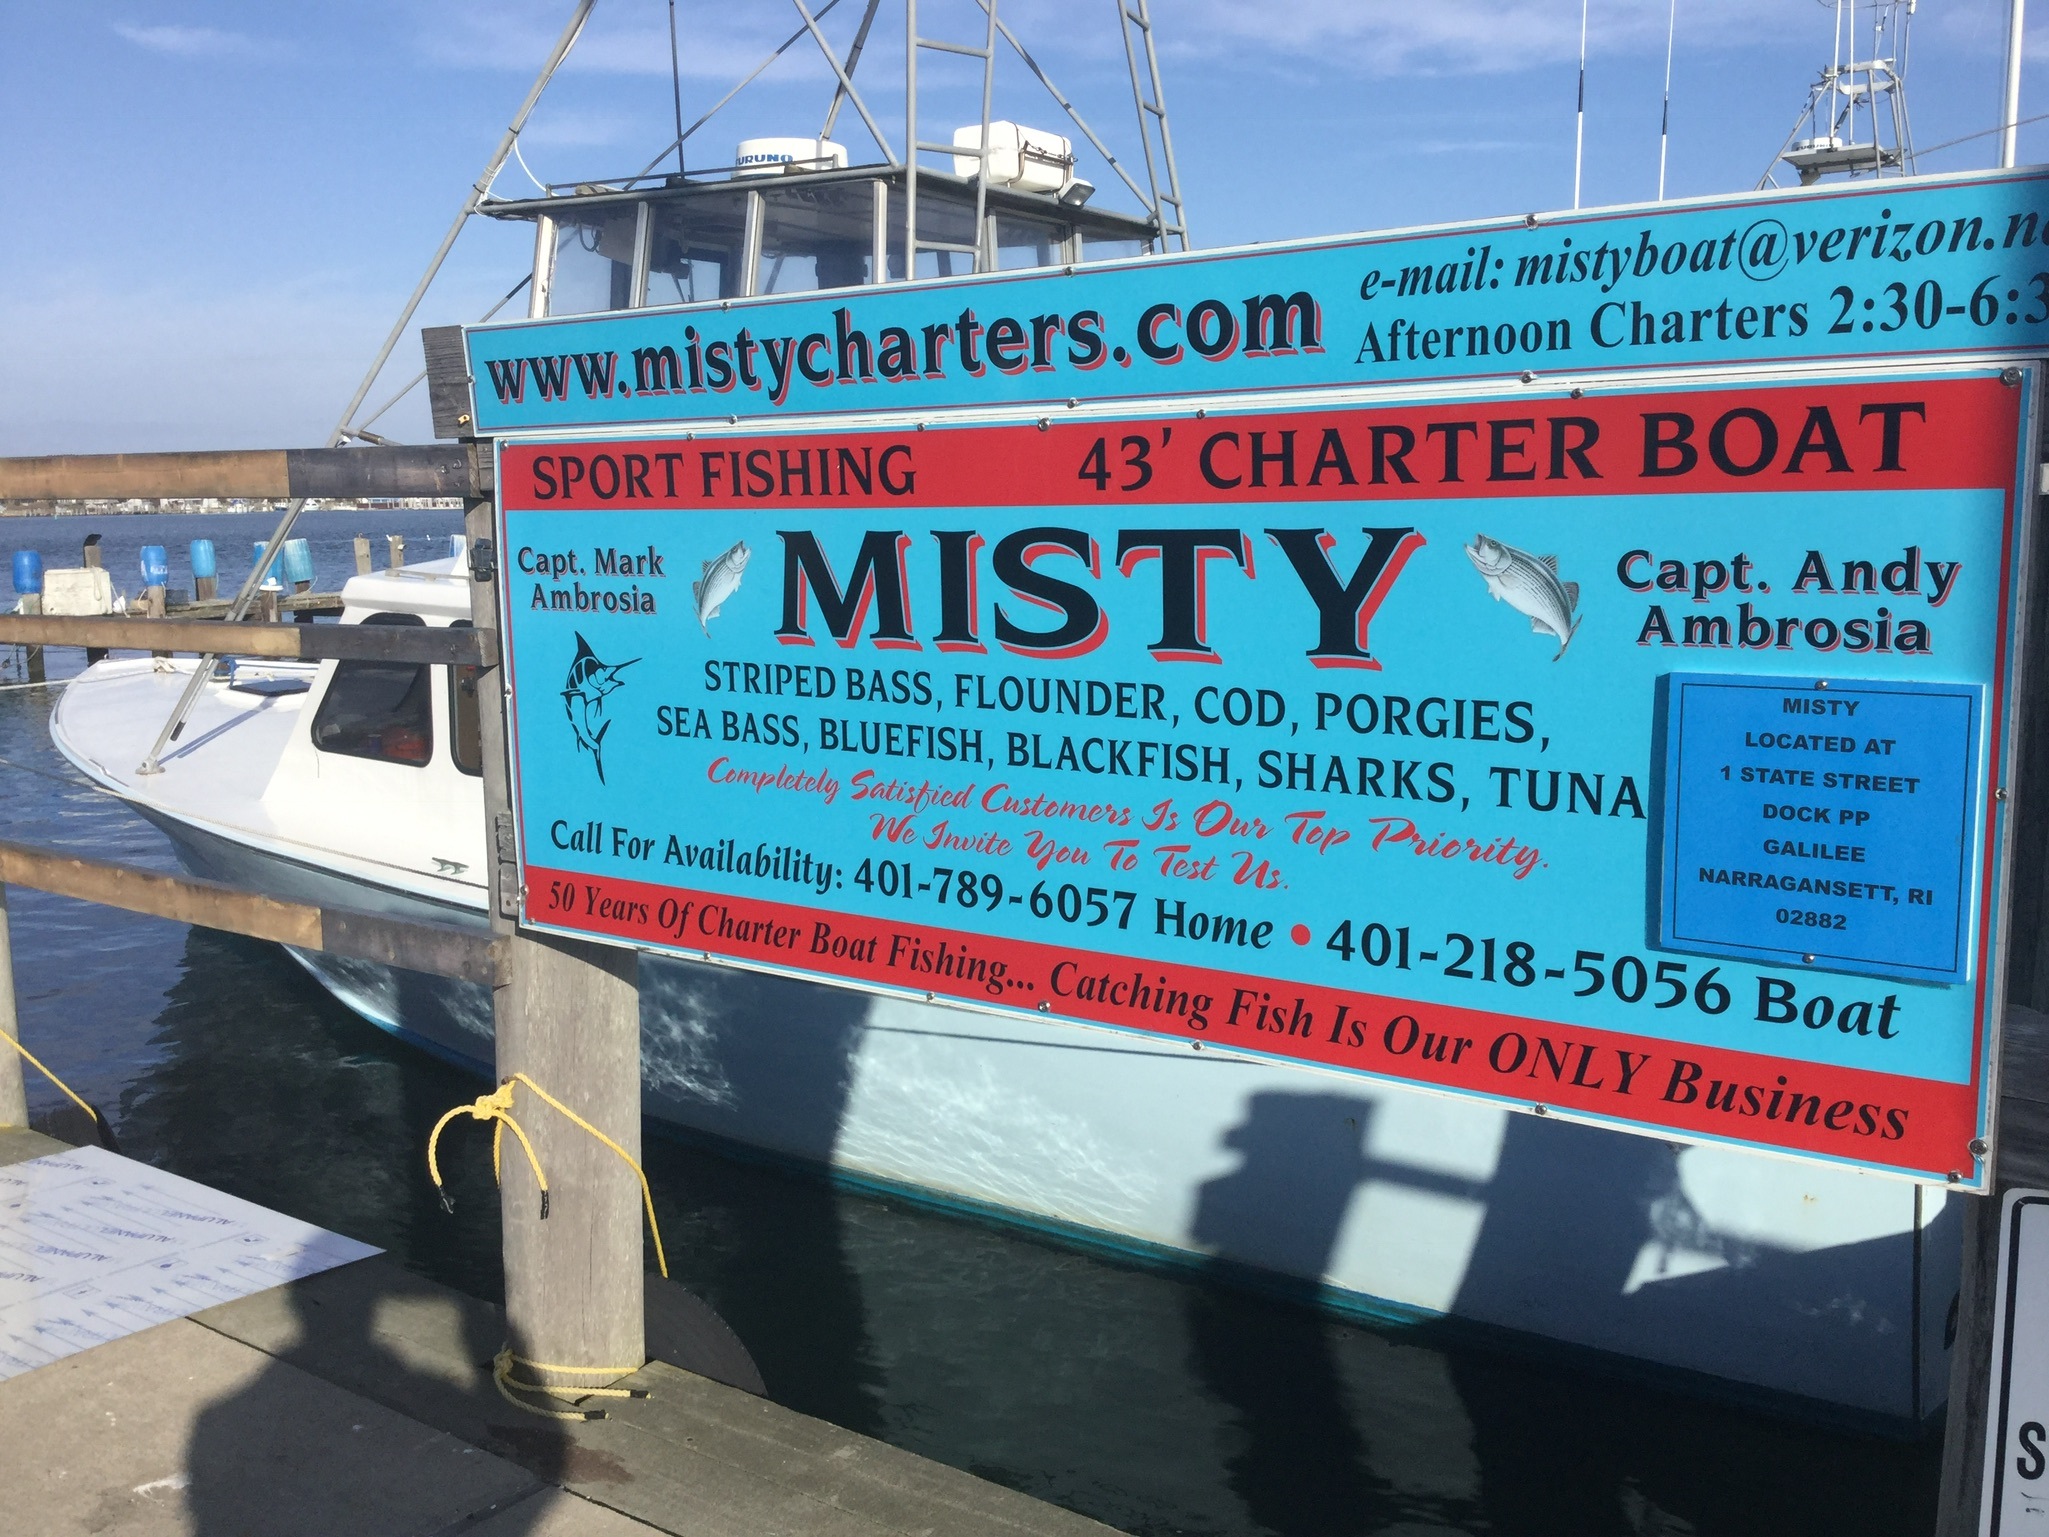 RI Charter Boat Misty is located at: 1 State Street, Narragansett RI 02882